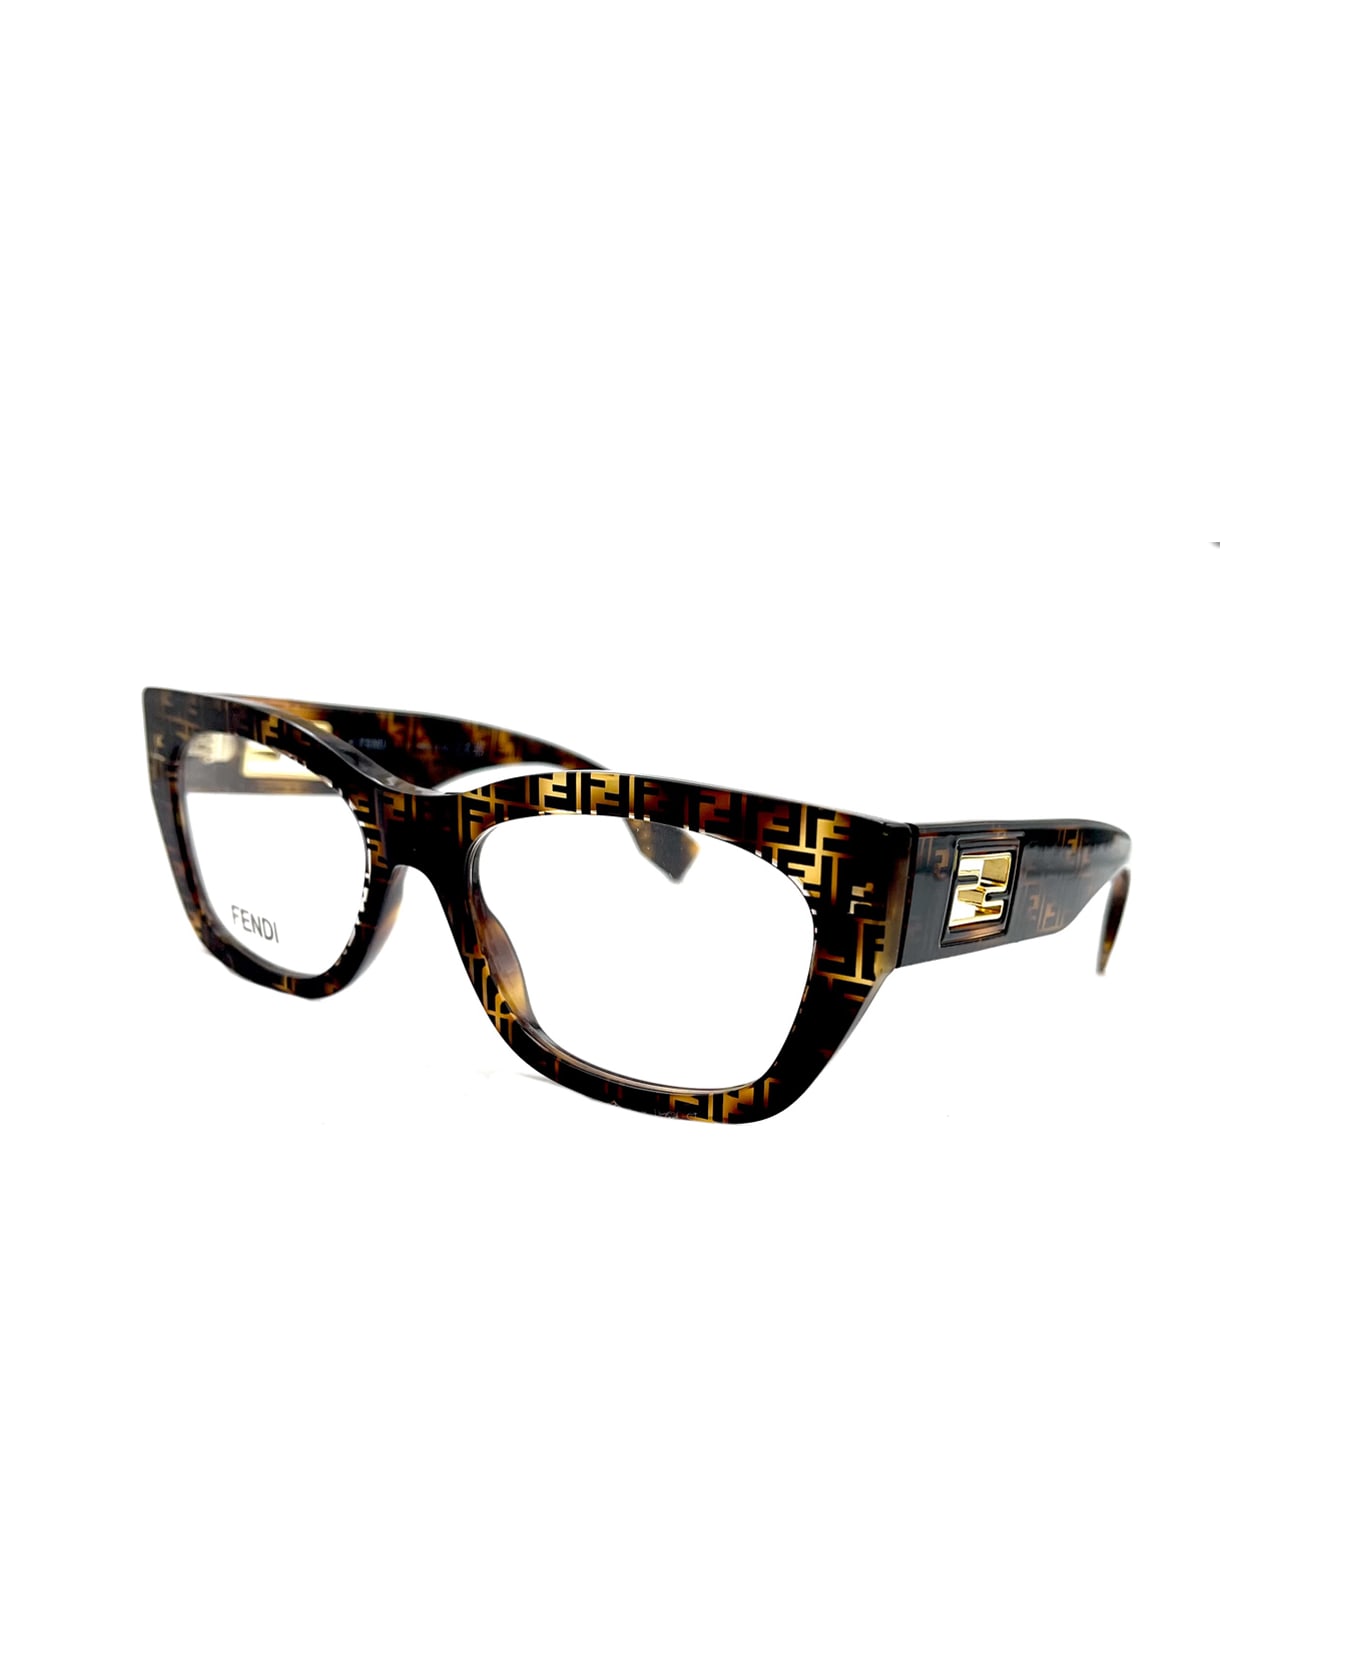 Fendi Eyewear Fe50082i 055 Glasses - Marrone アイウェア